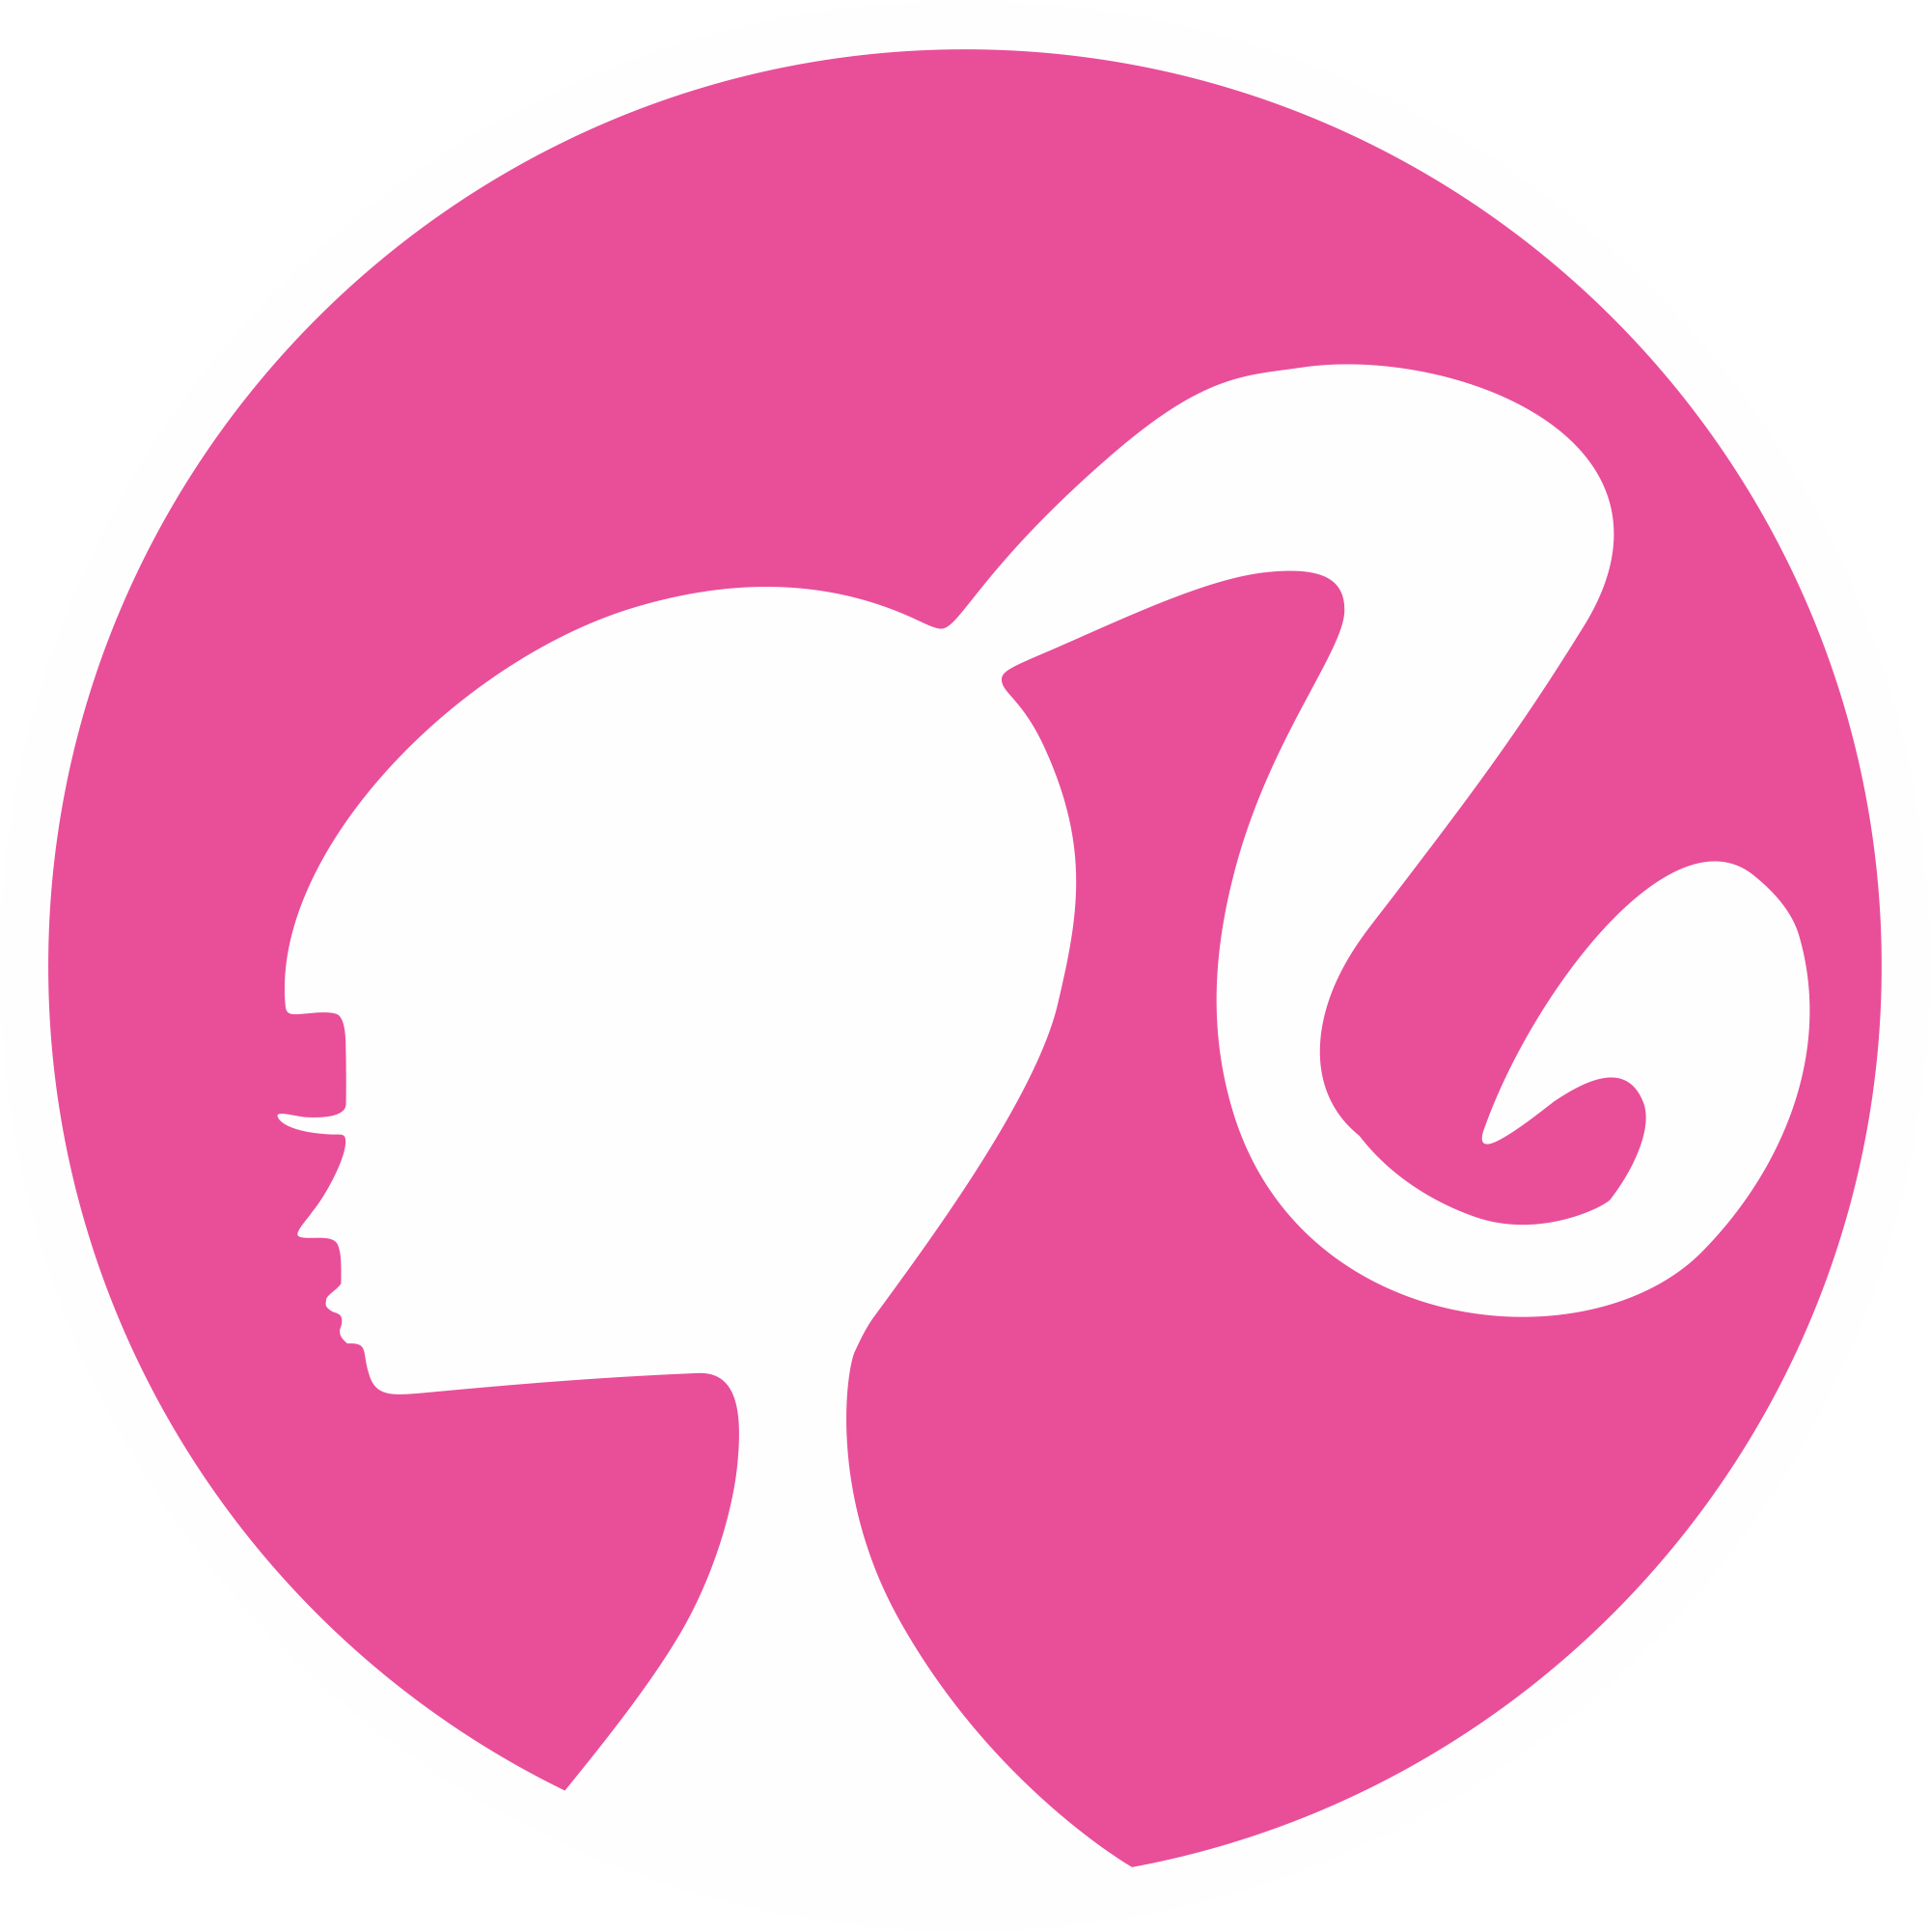 barbie-logo-png-14